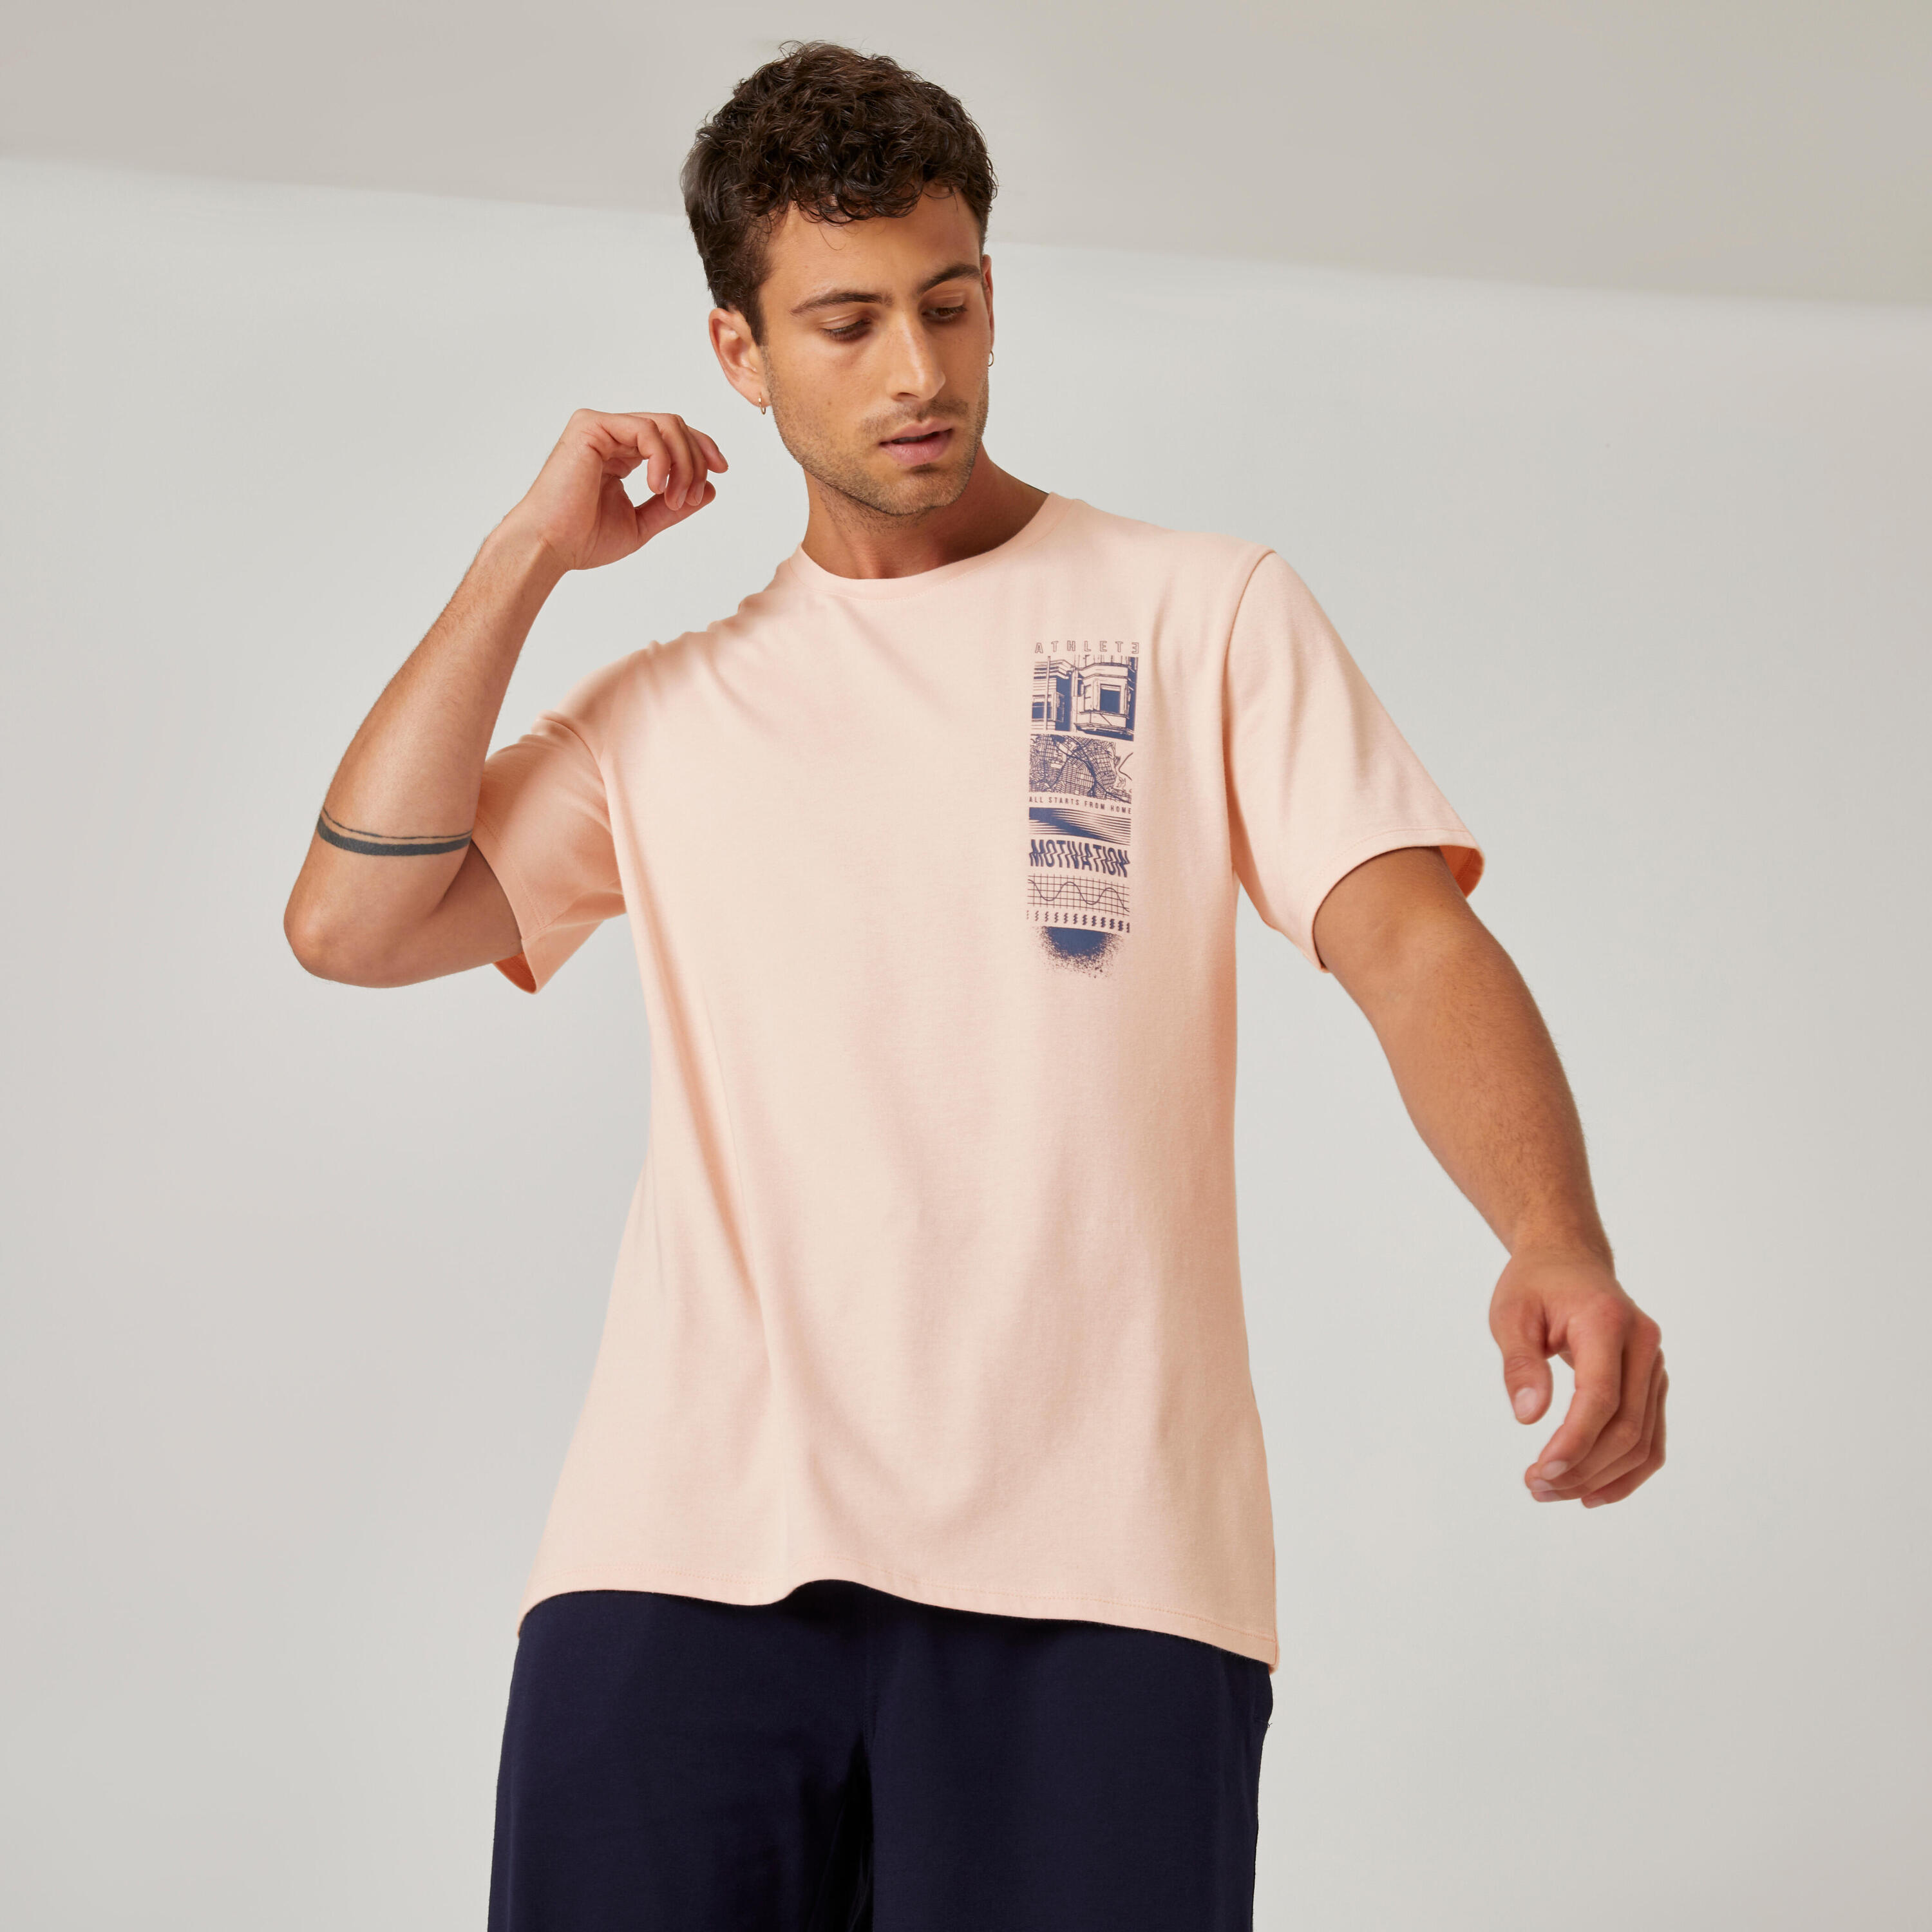 DOMYOS Men's Short-Sleeved Straight-Cut Crew Neck Cotton Fitness T-Shirt 500 - Pink Print